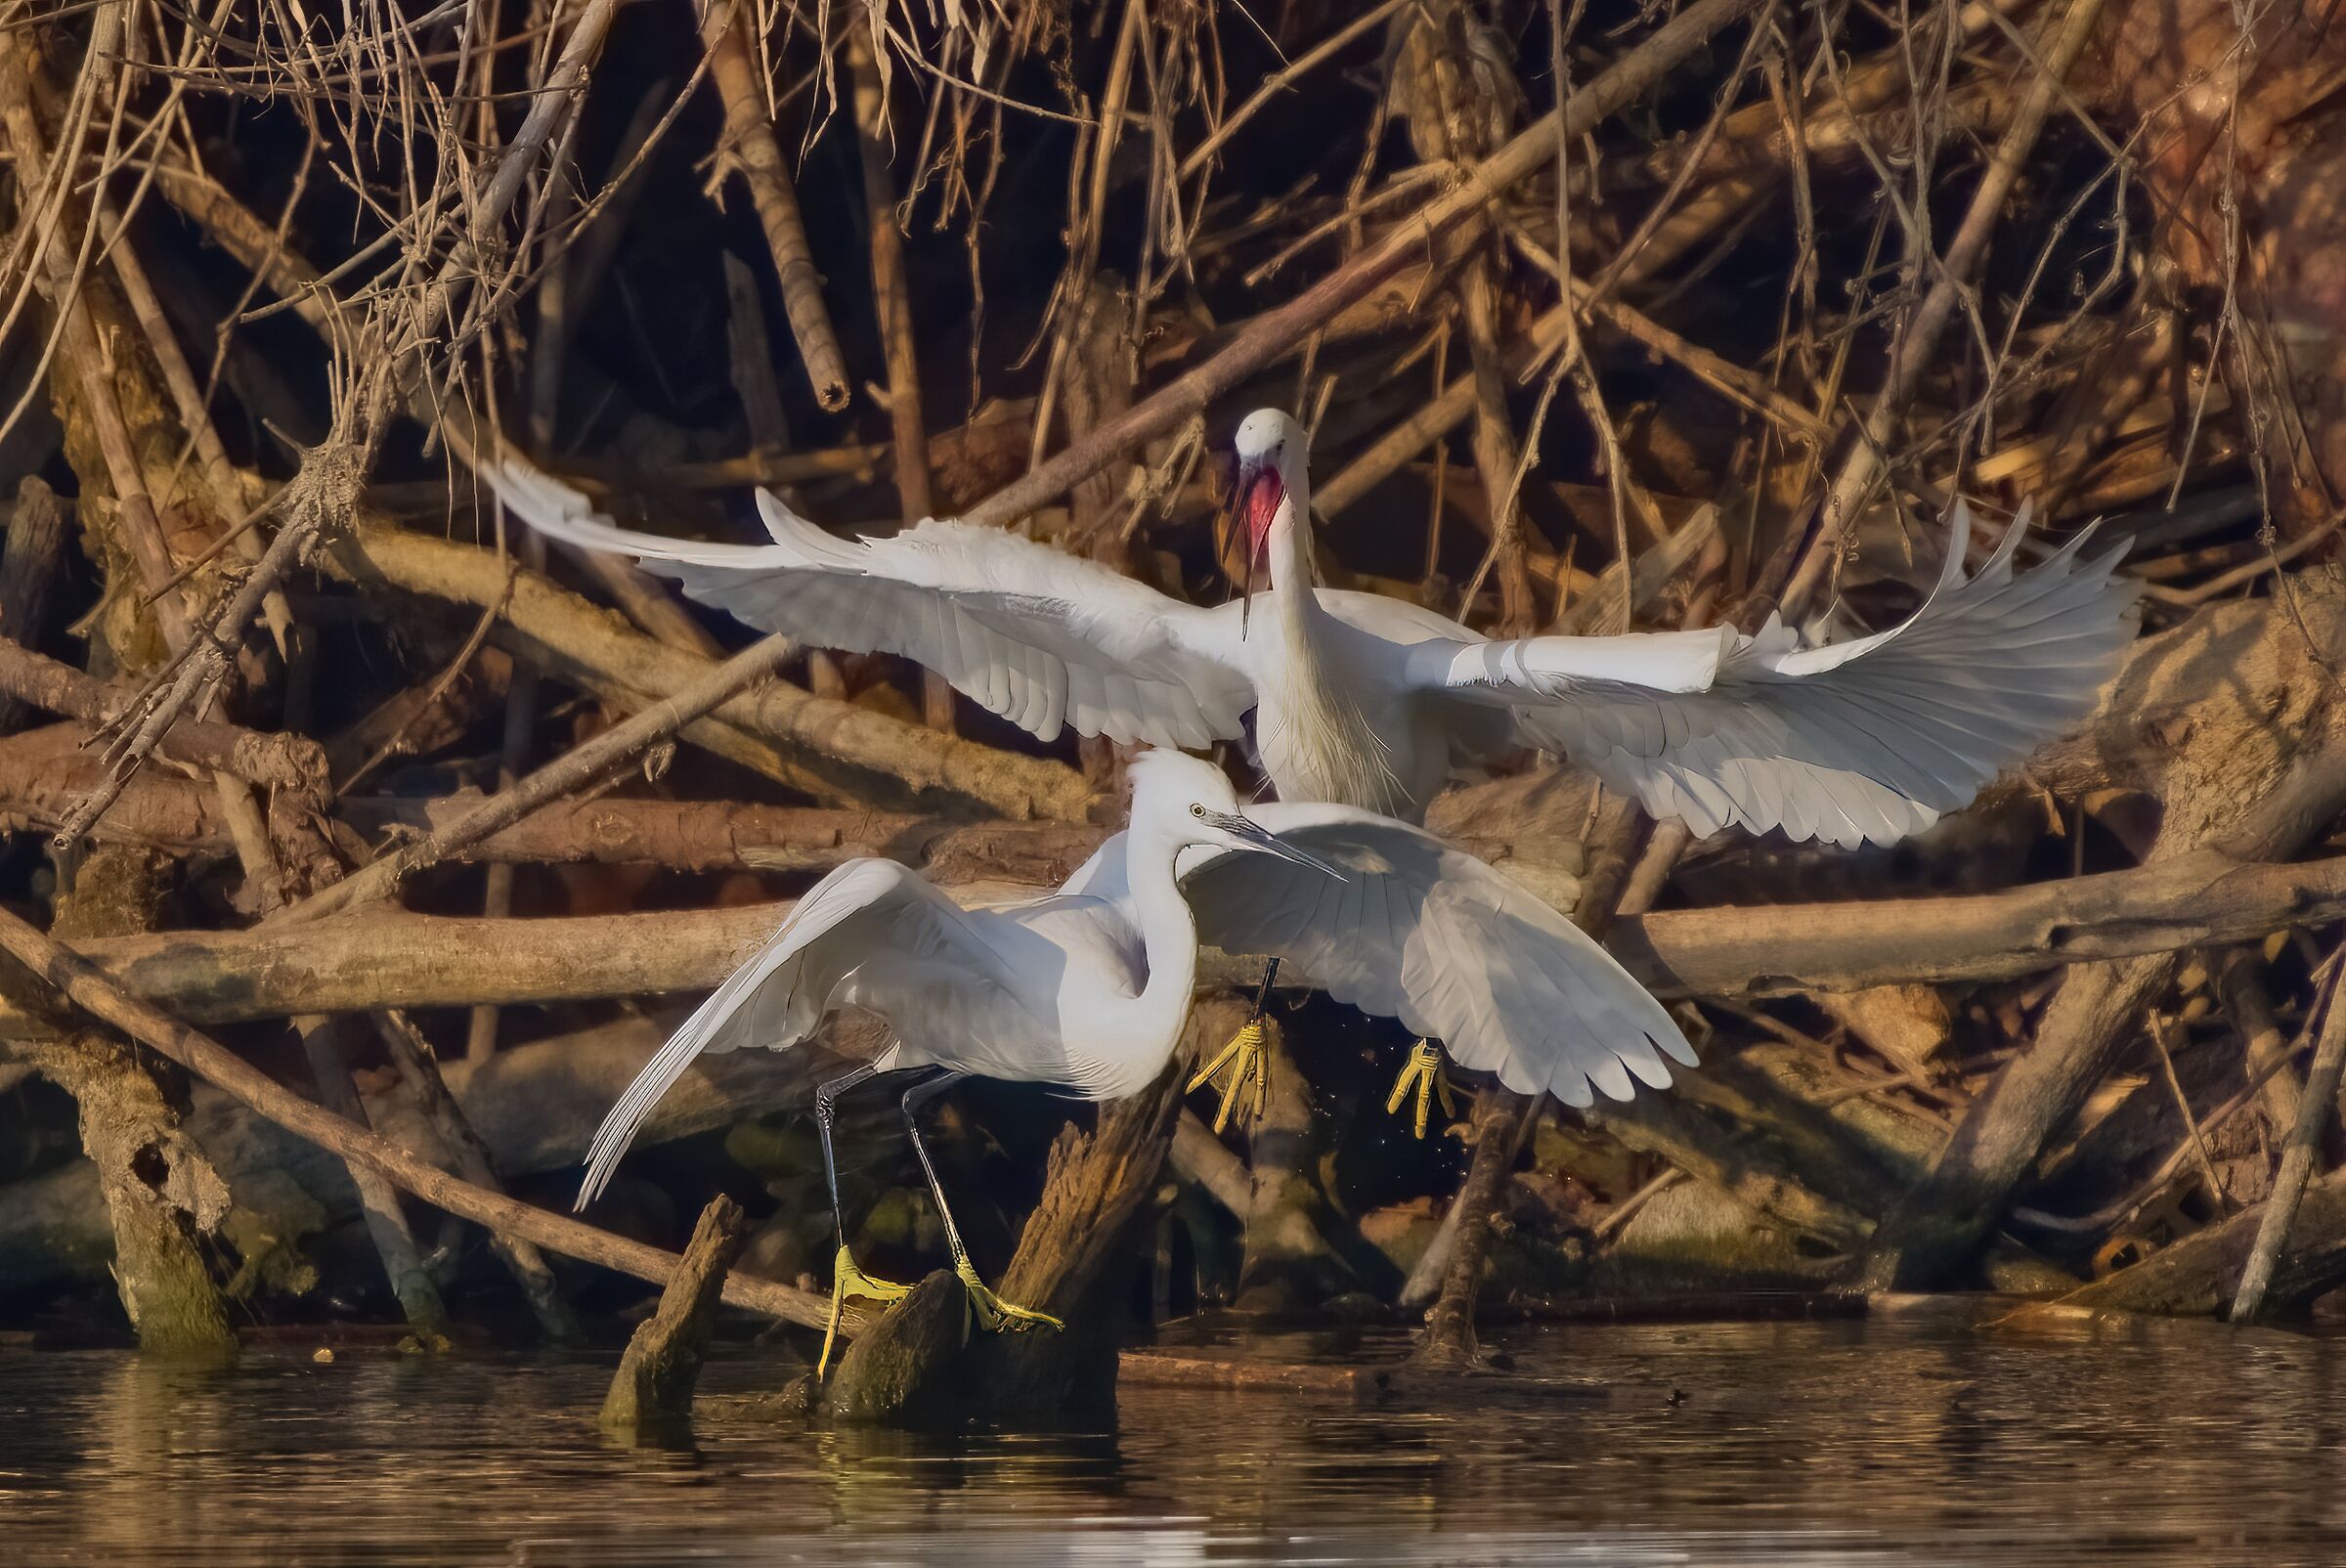 Skirmishes between egrets...